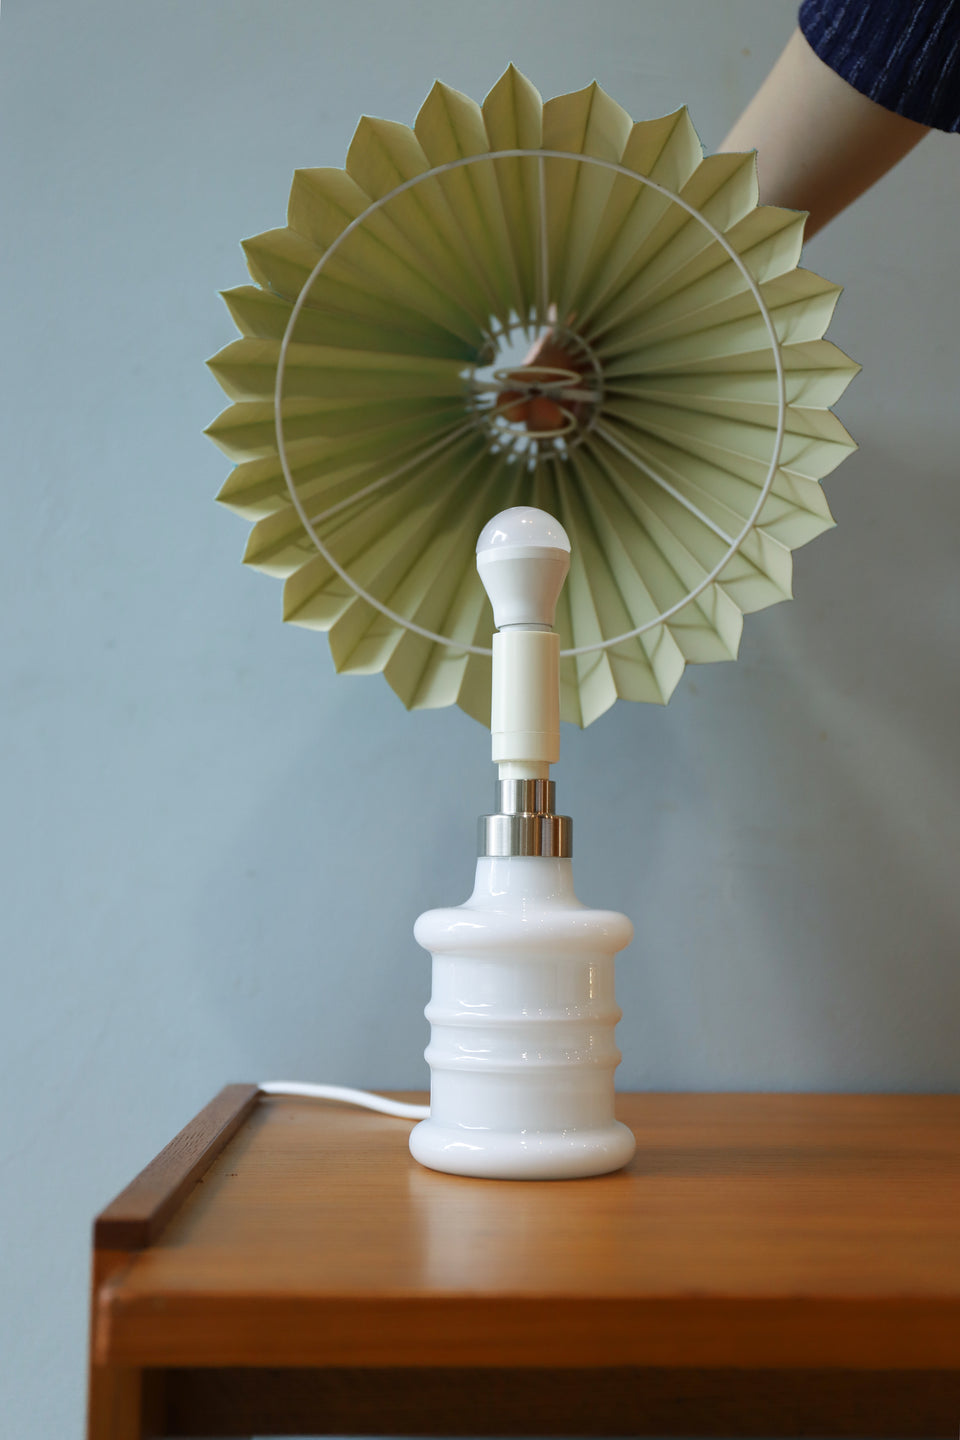 Holmegaard Table Lamp “Apoteker” Small/ホルムガード テーブルランプ シセ・ヴェアナー スモールサイズ